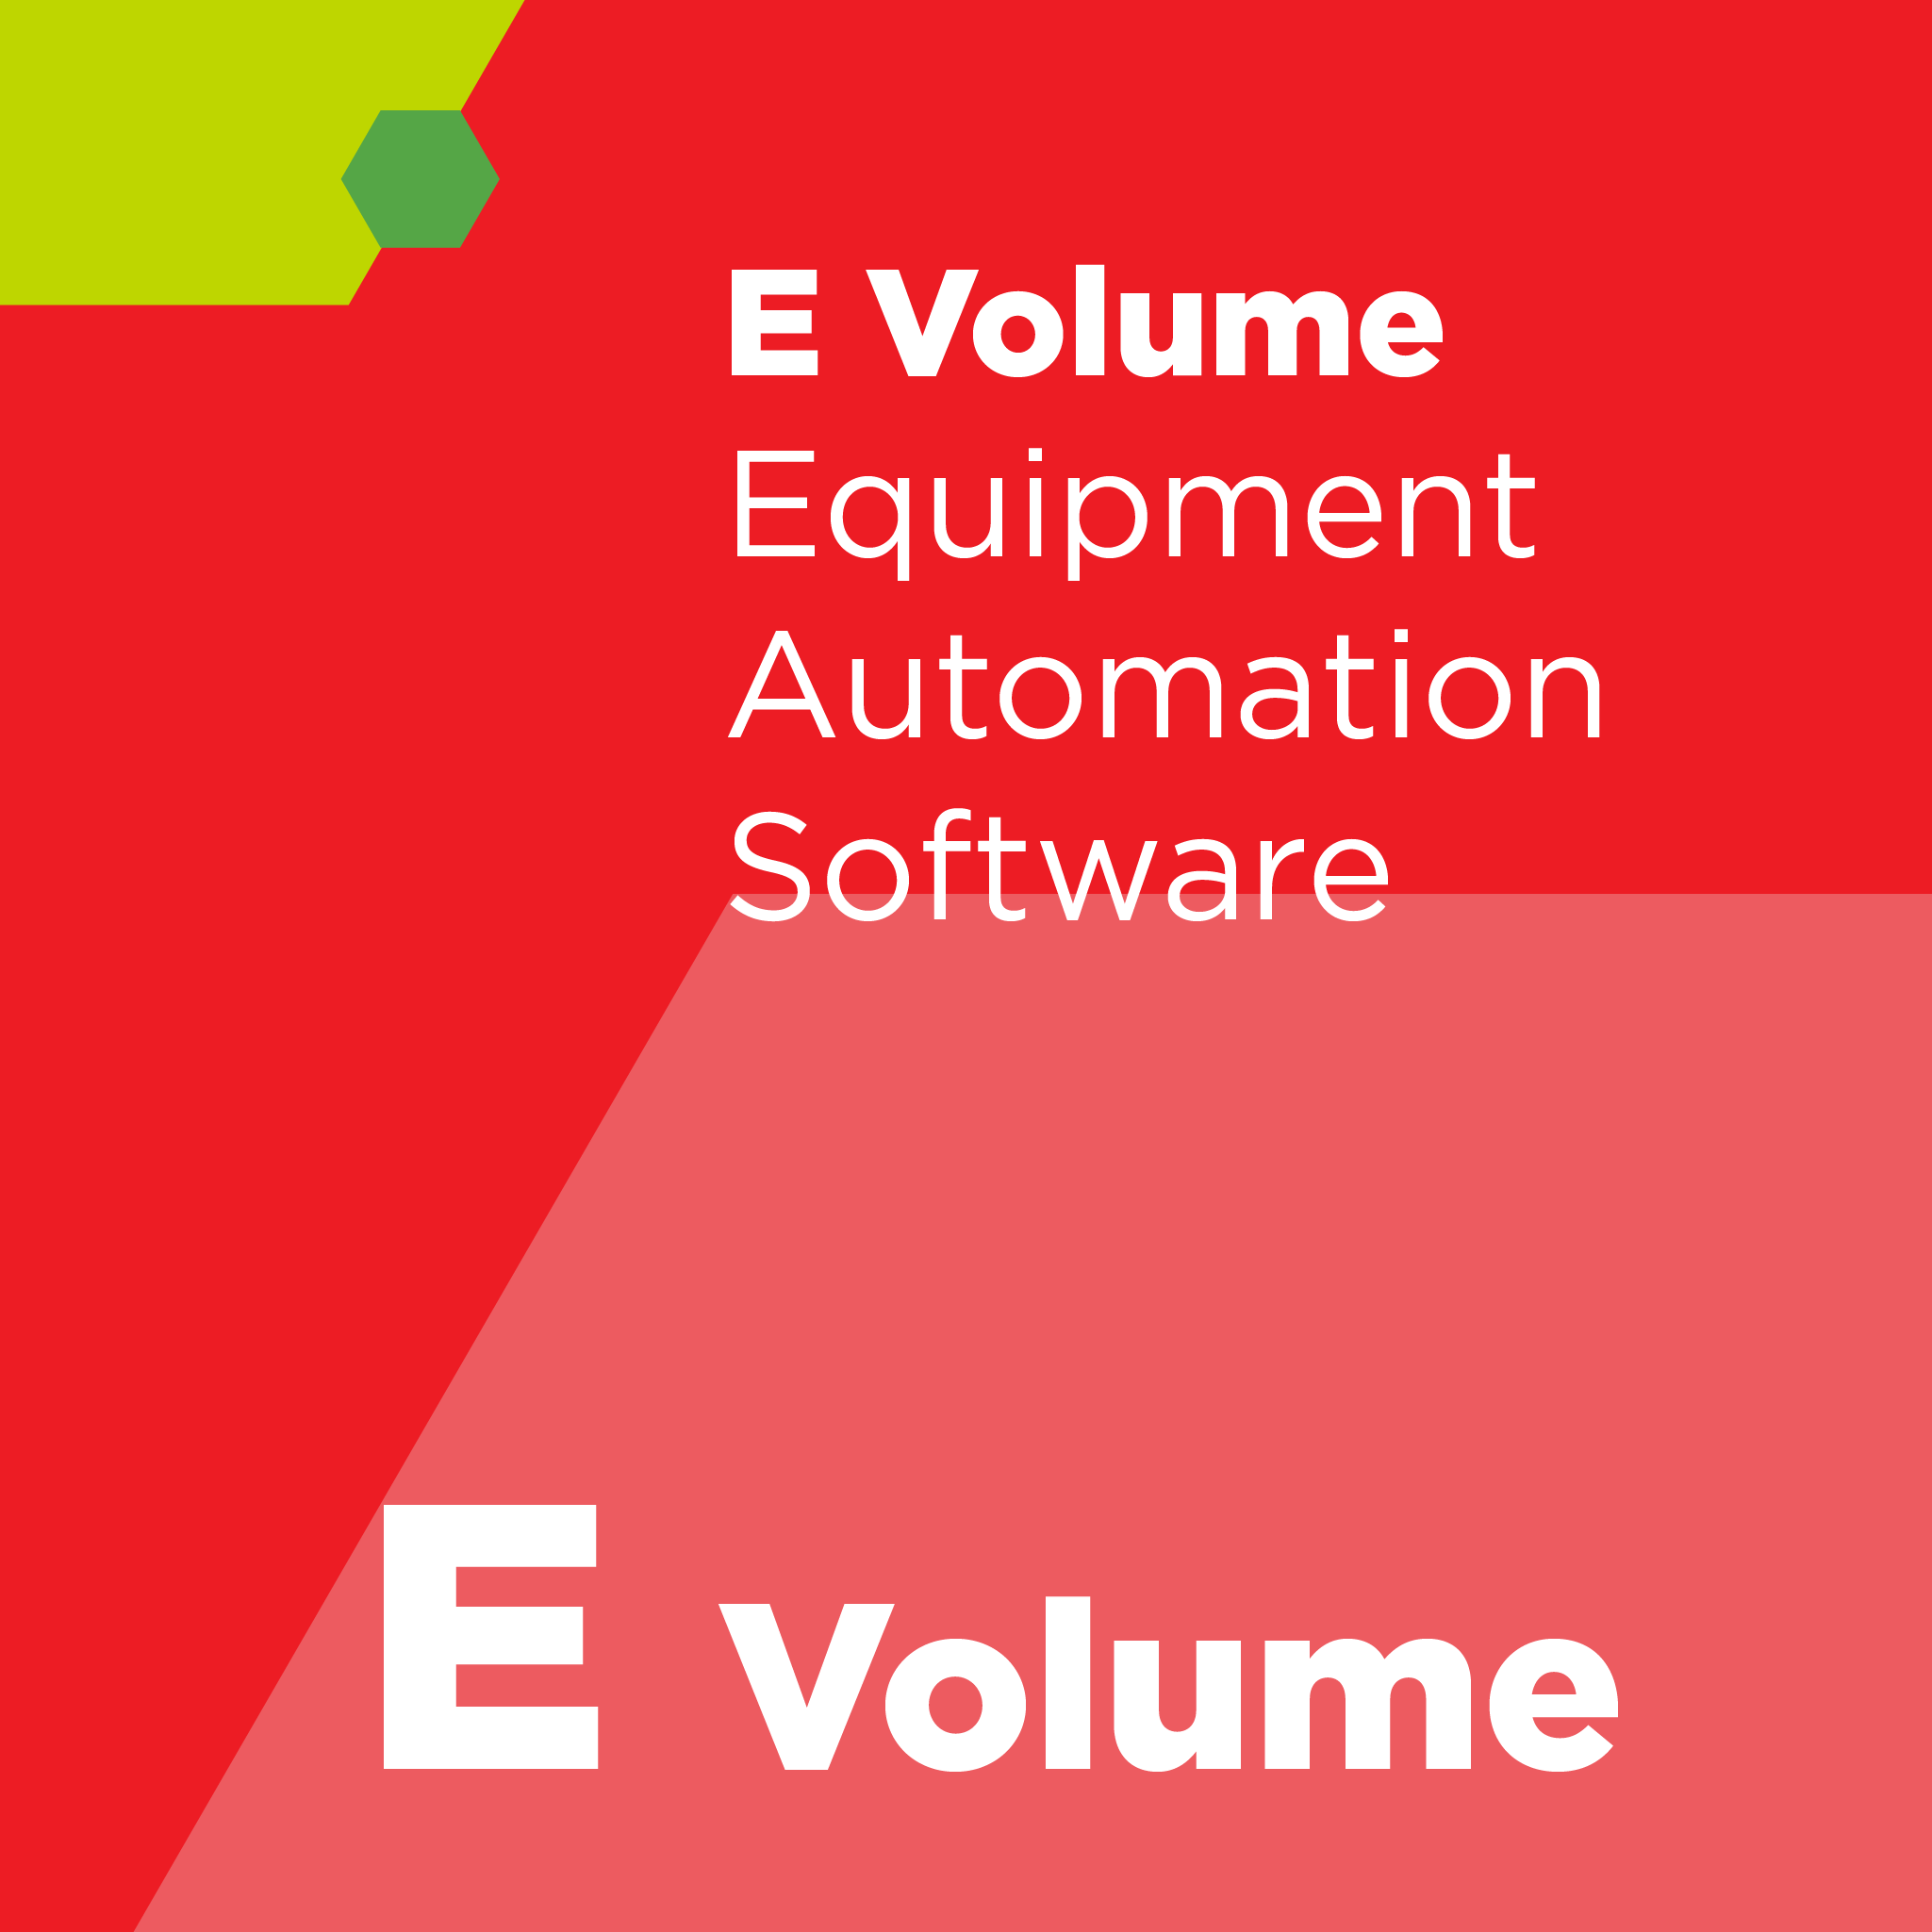 E05800 - SEMI E58 - Automated Reliability, Availability, and Maintainability Standard (ARAMS): Concepts, Behavior, and Services